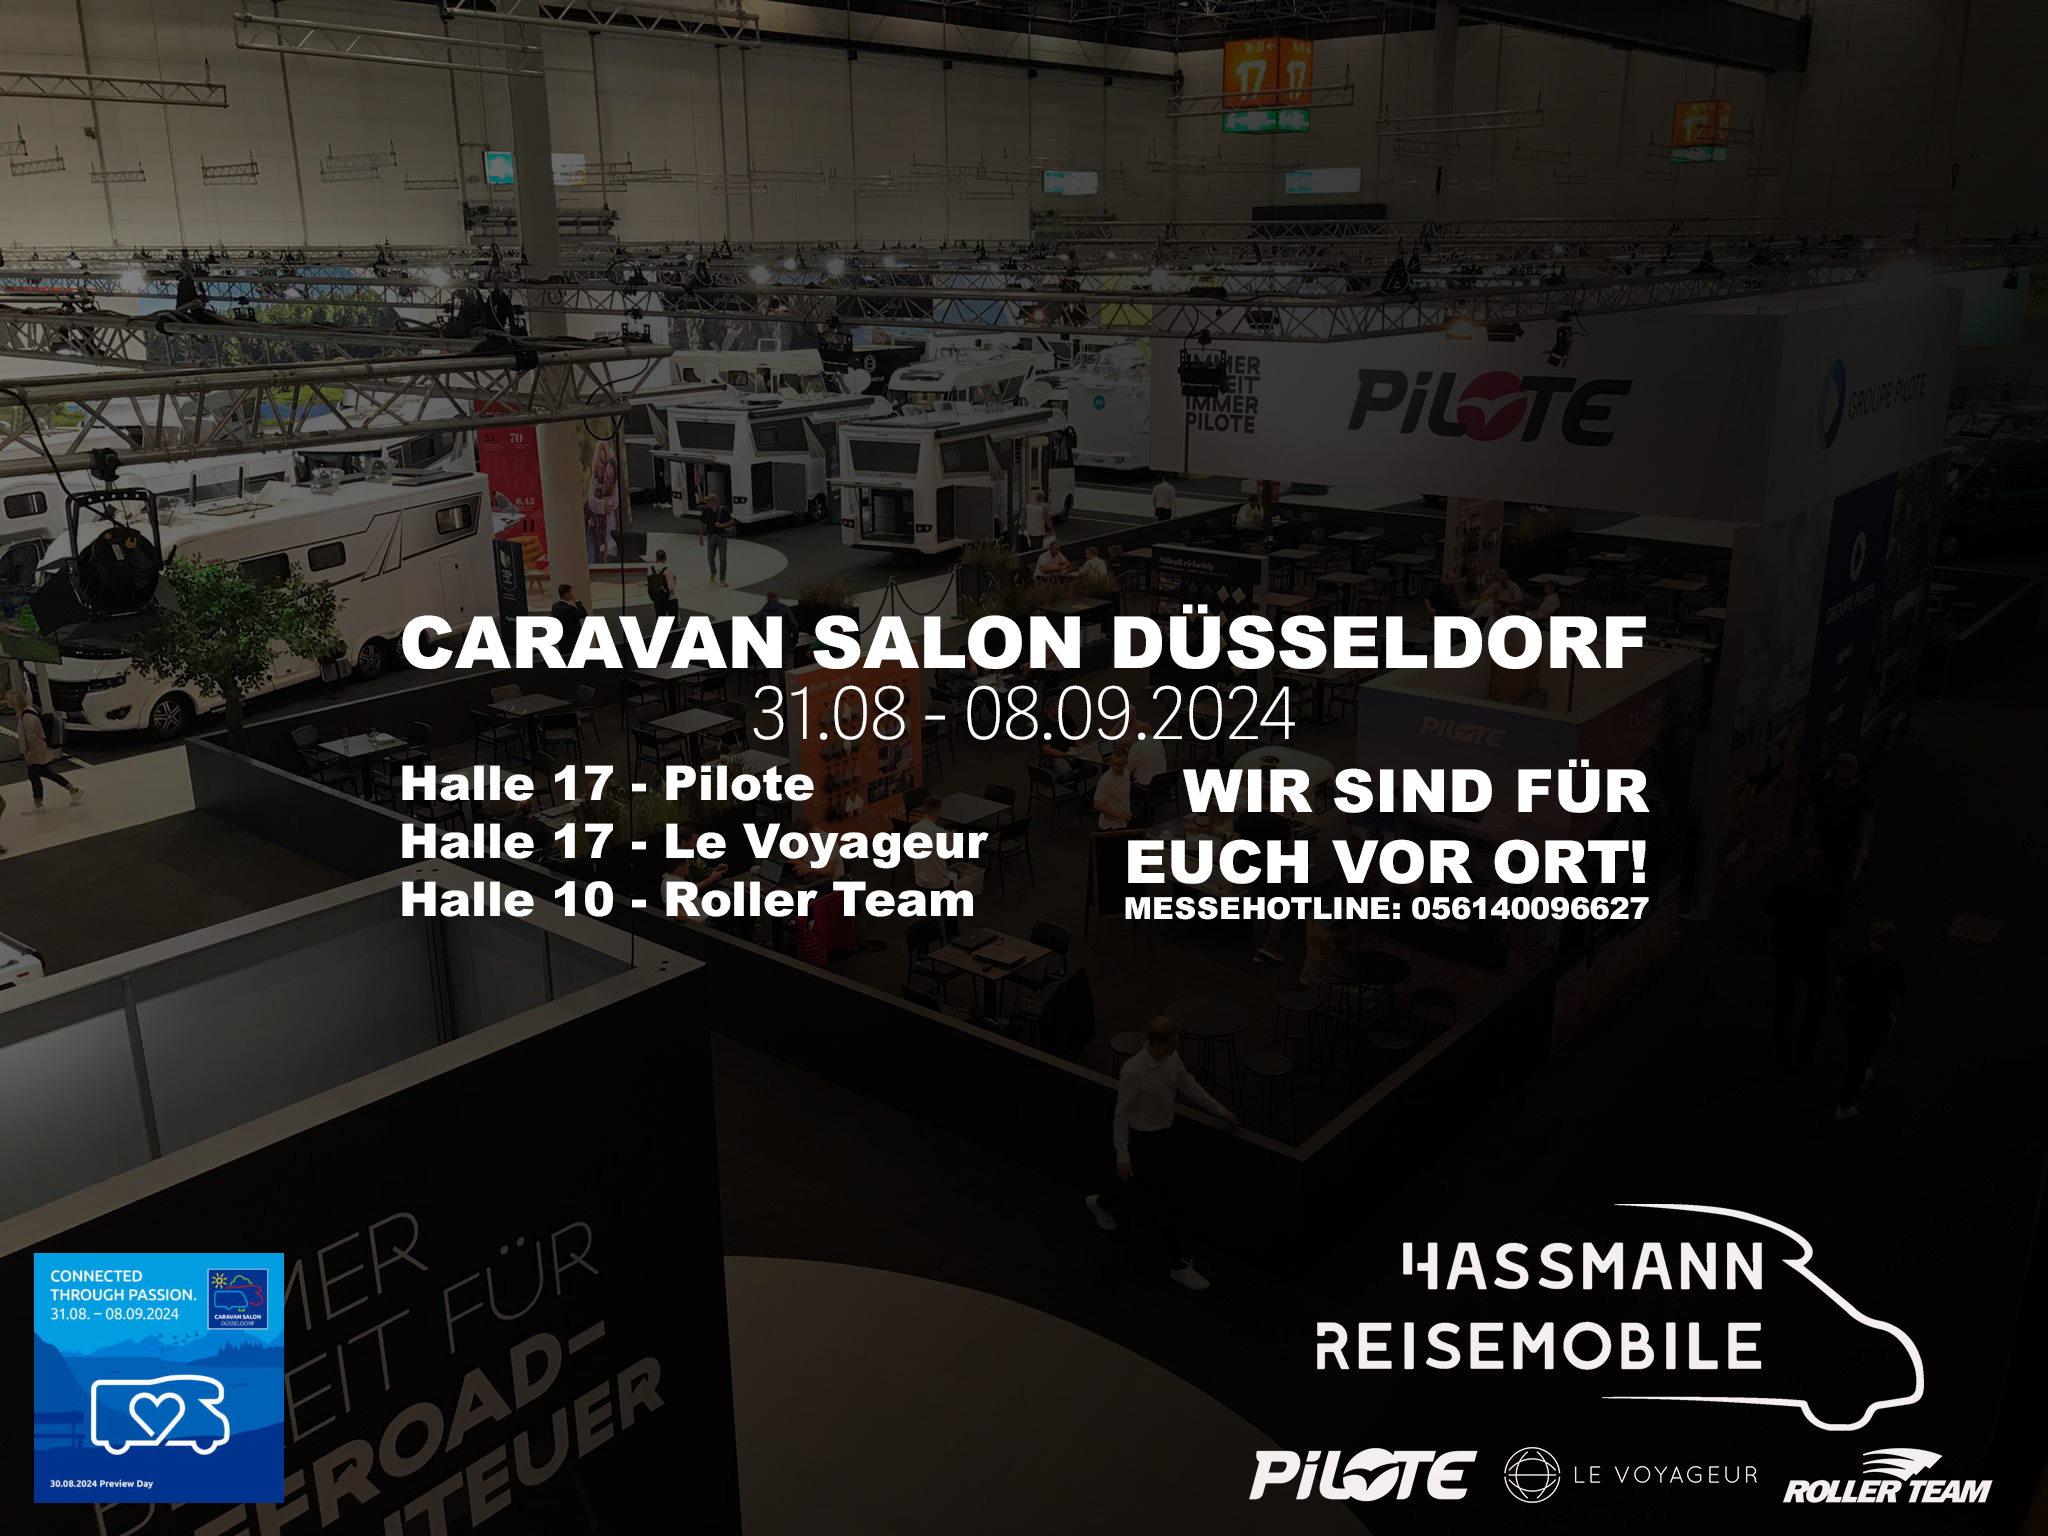 caravan Salon Düsseldorf pilote le voyageur roller team hassmann kassel Fuldatal